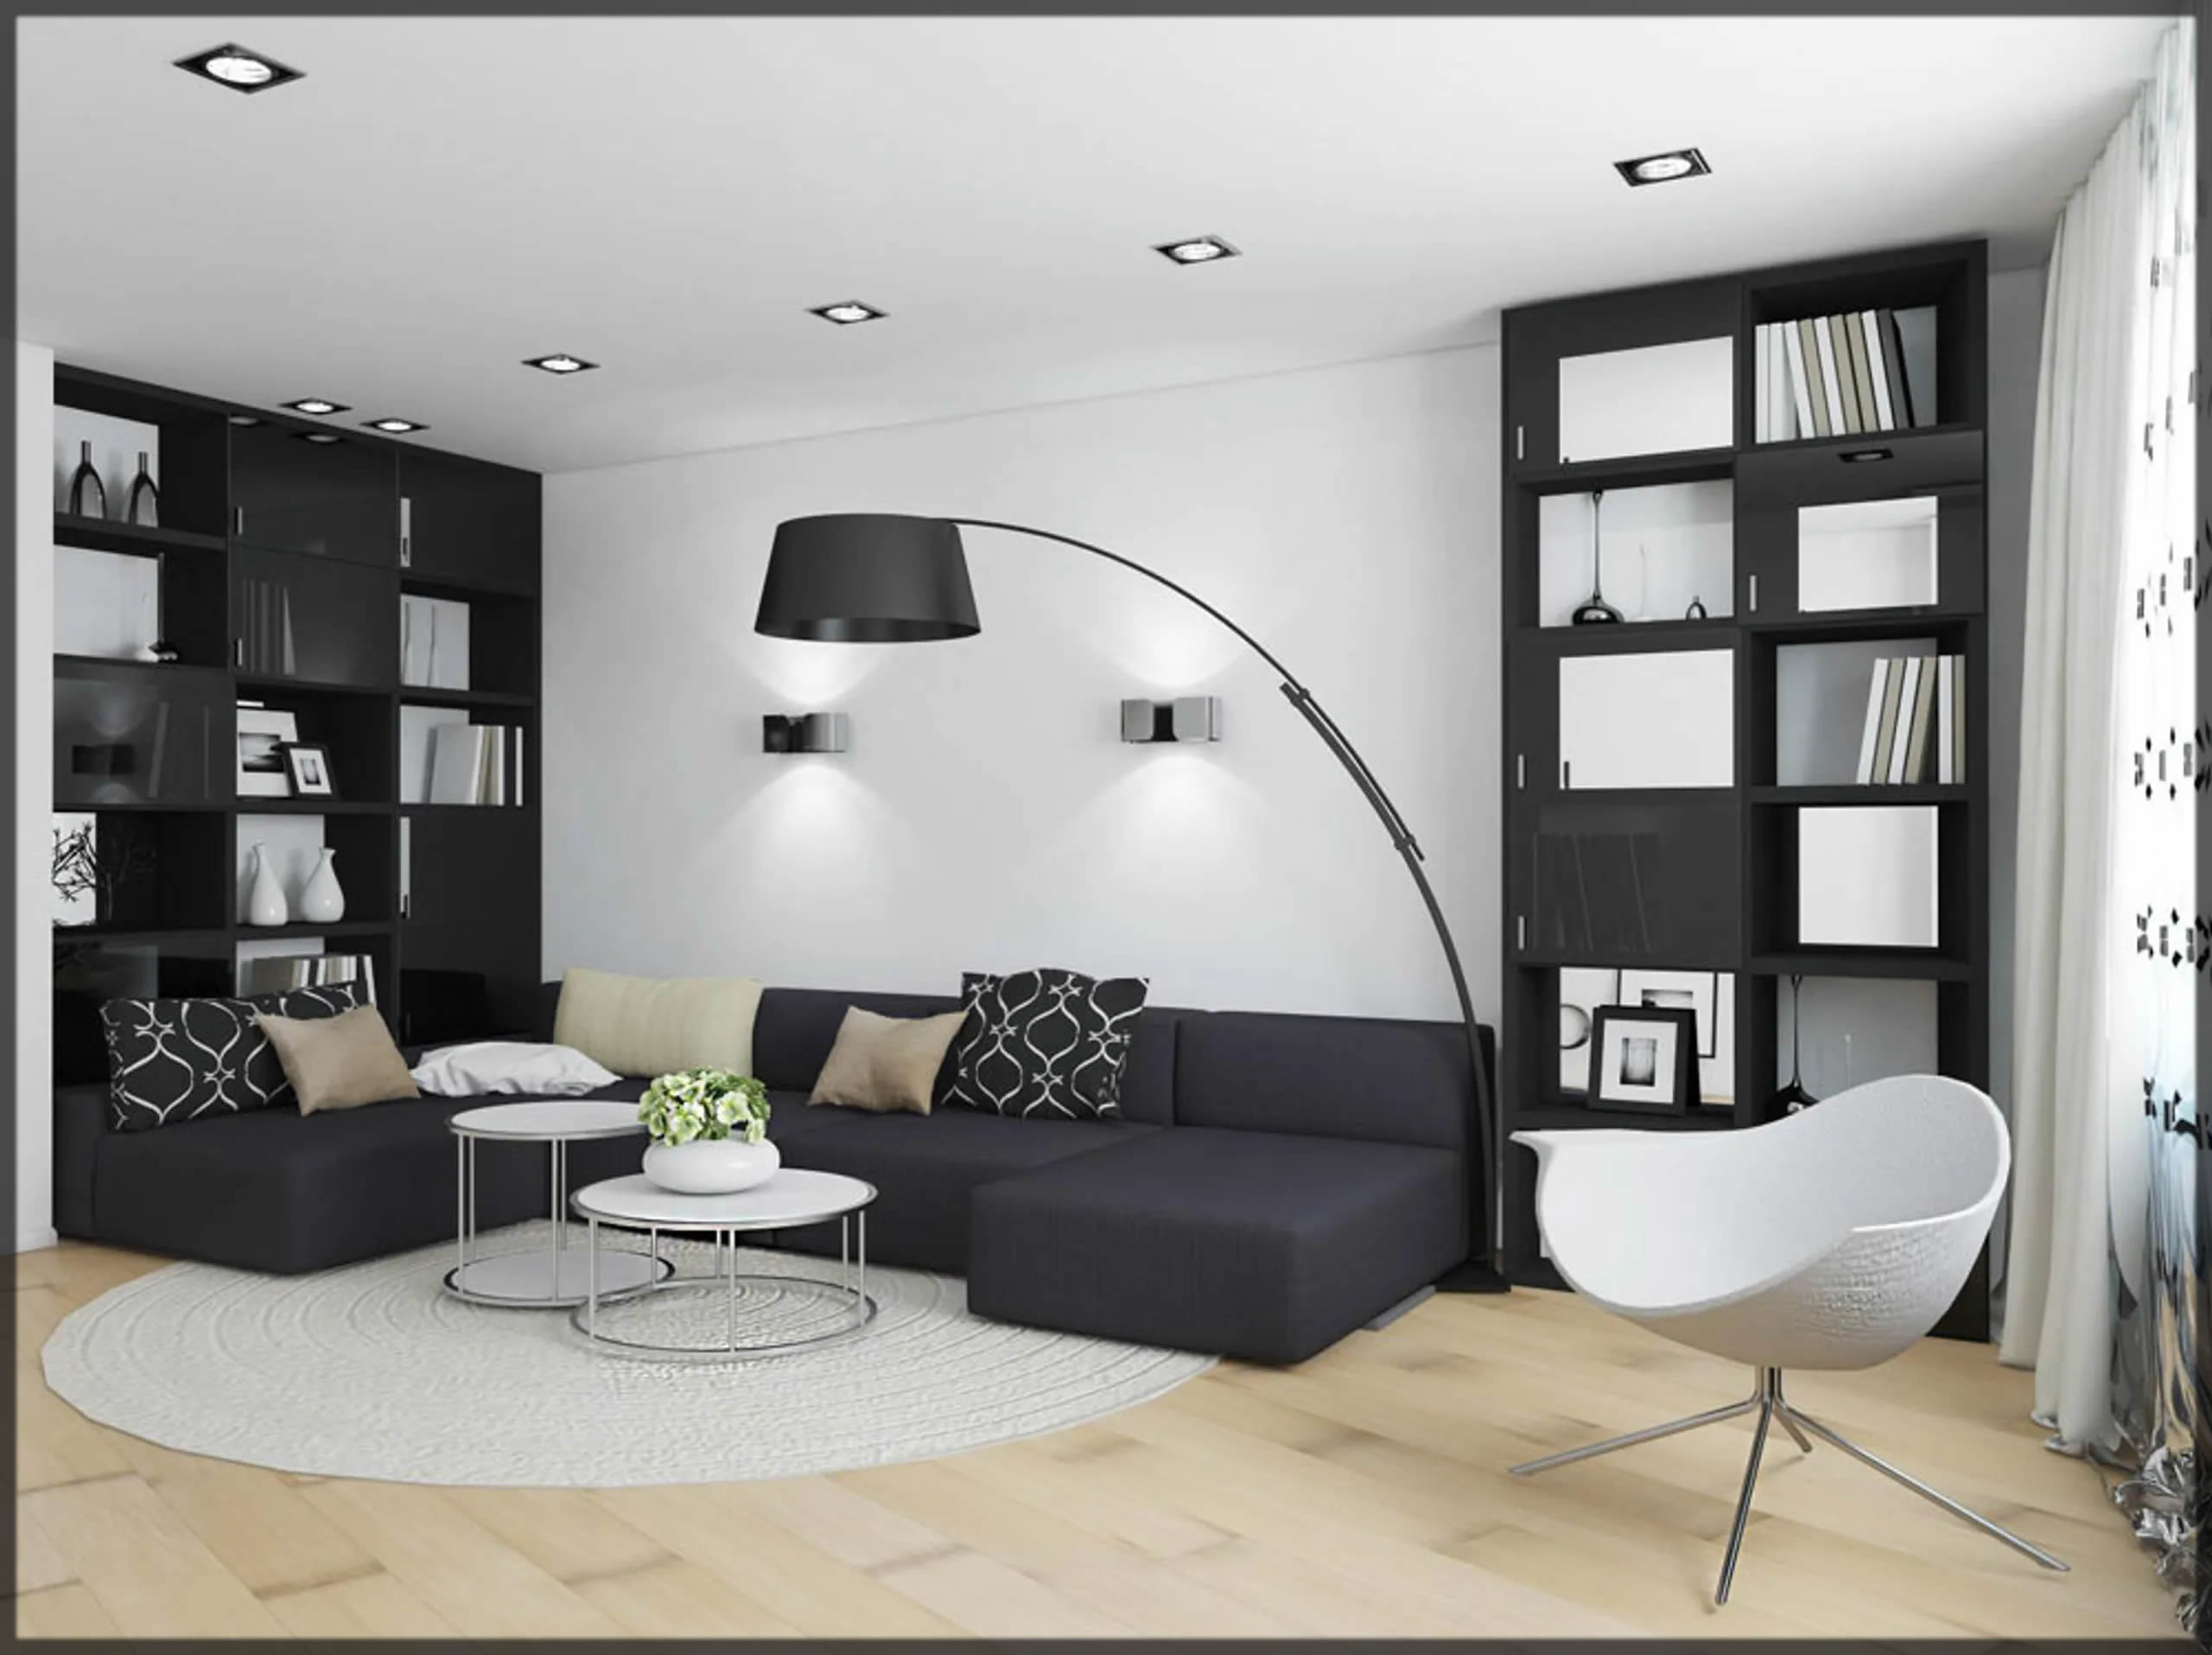 Monotone living room design